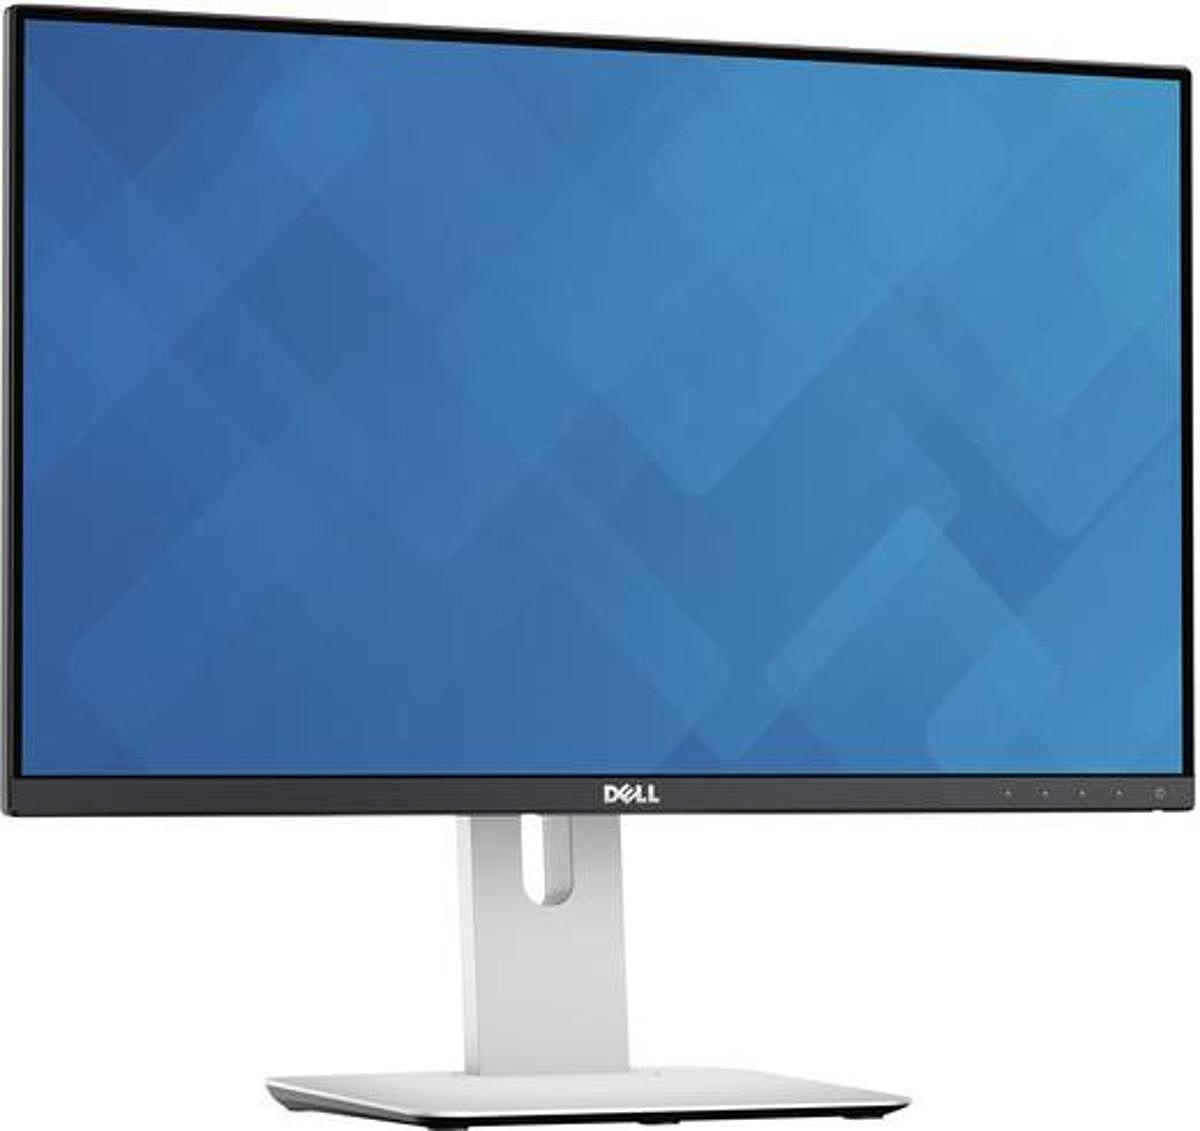 Dell UltraSharp U2414H 60,5cm 23,8" TFT-Monitor Bildschirm FULL HD SIEHE TEXT